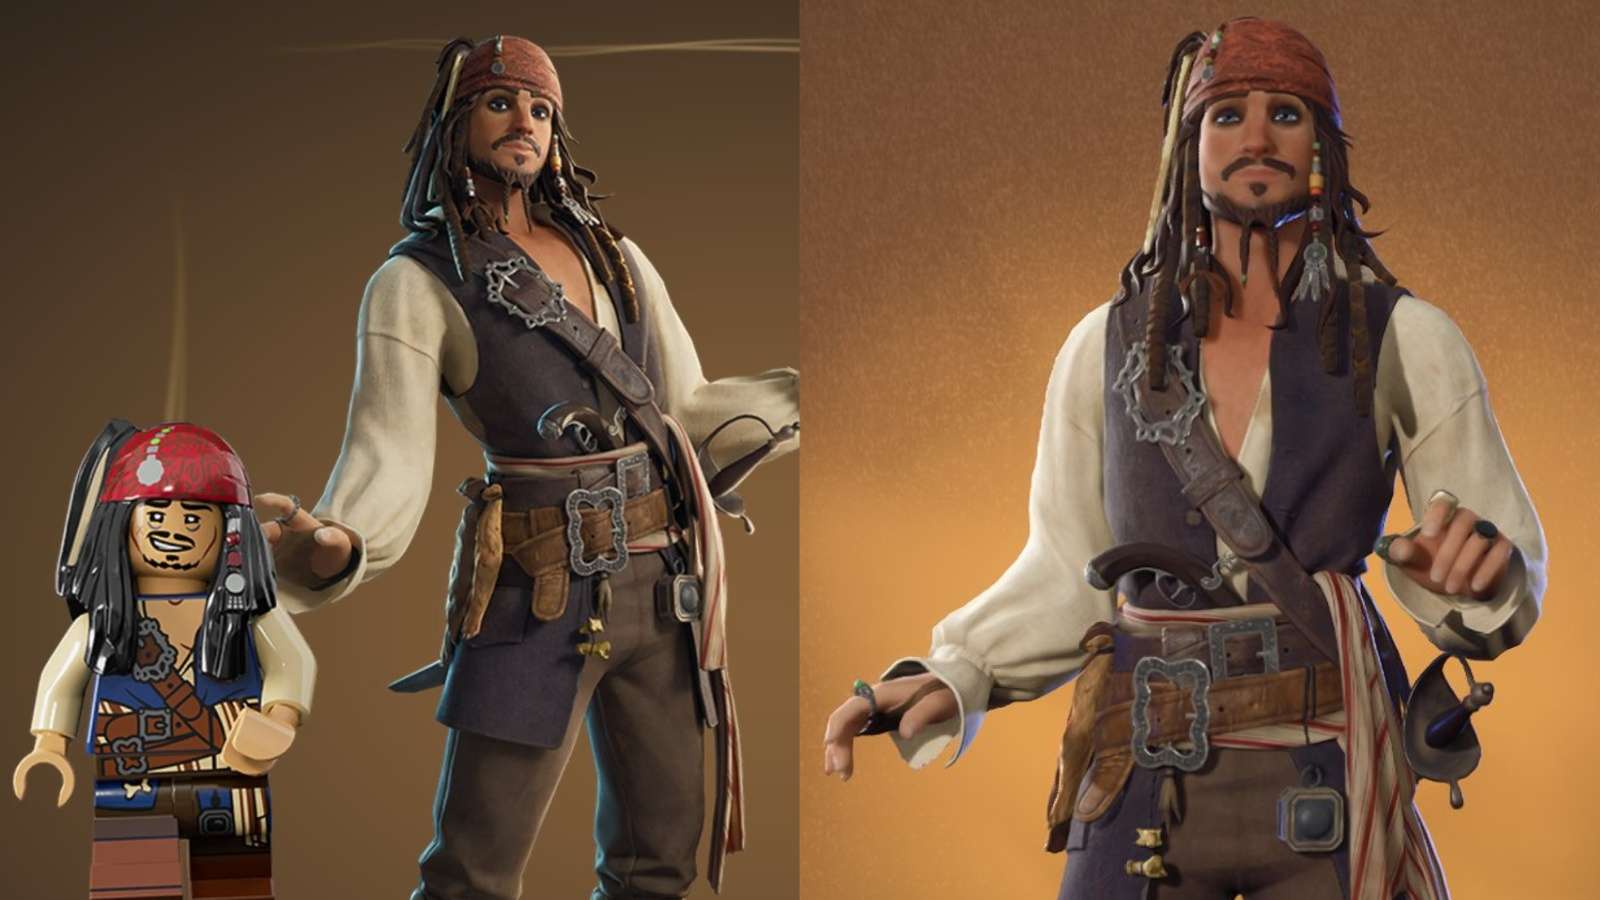 A screenshot featuring Jack Sparrow skin in Fortnite.